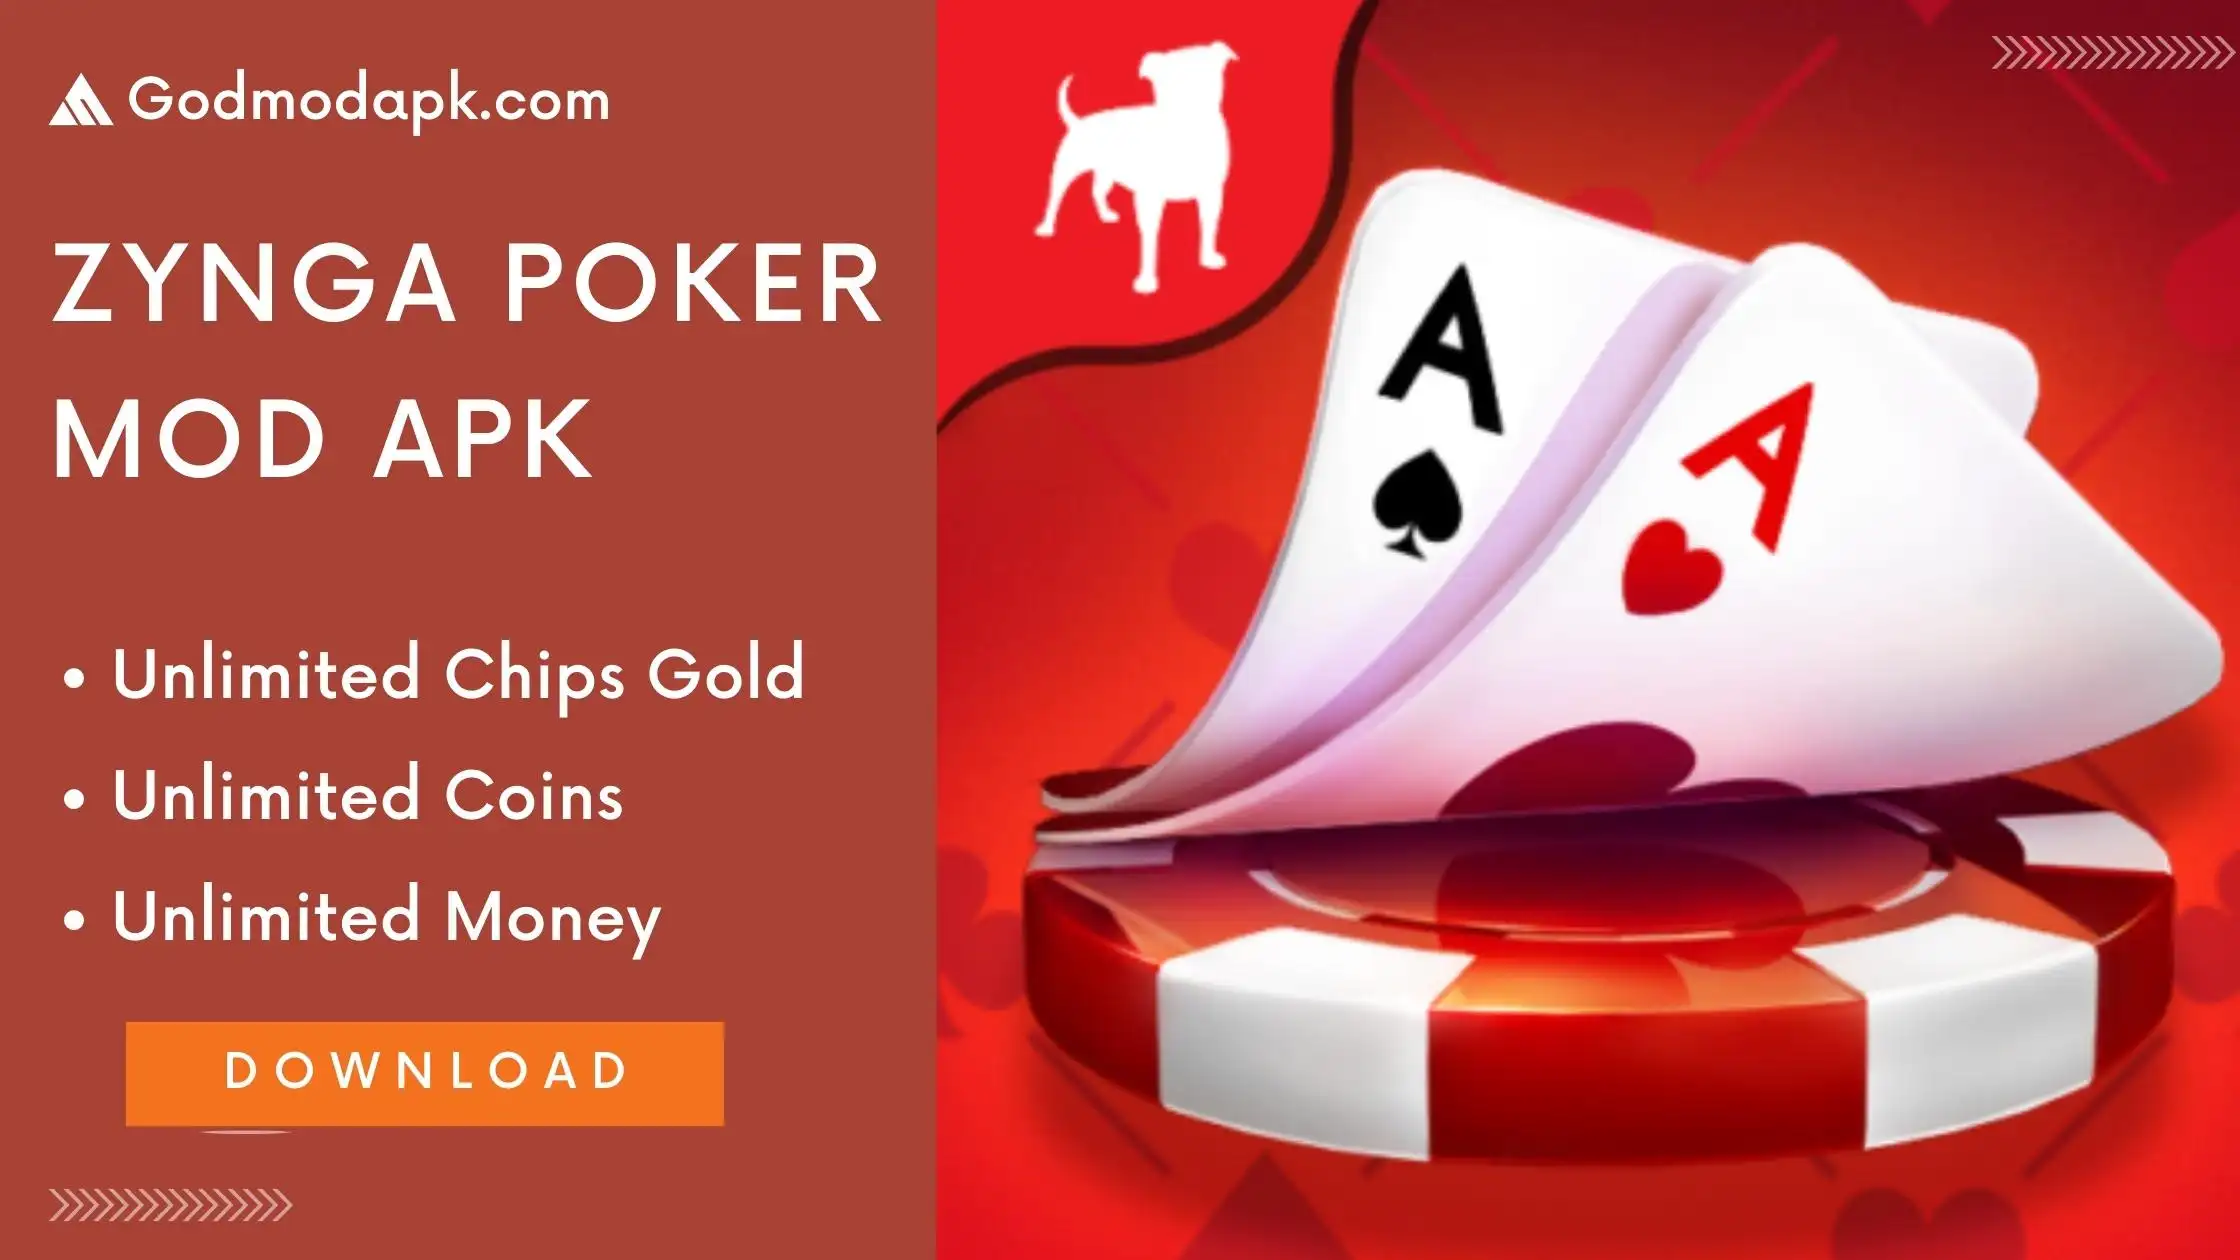 Zynga Poker Mod APK Download